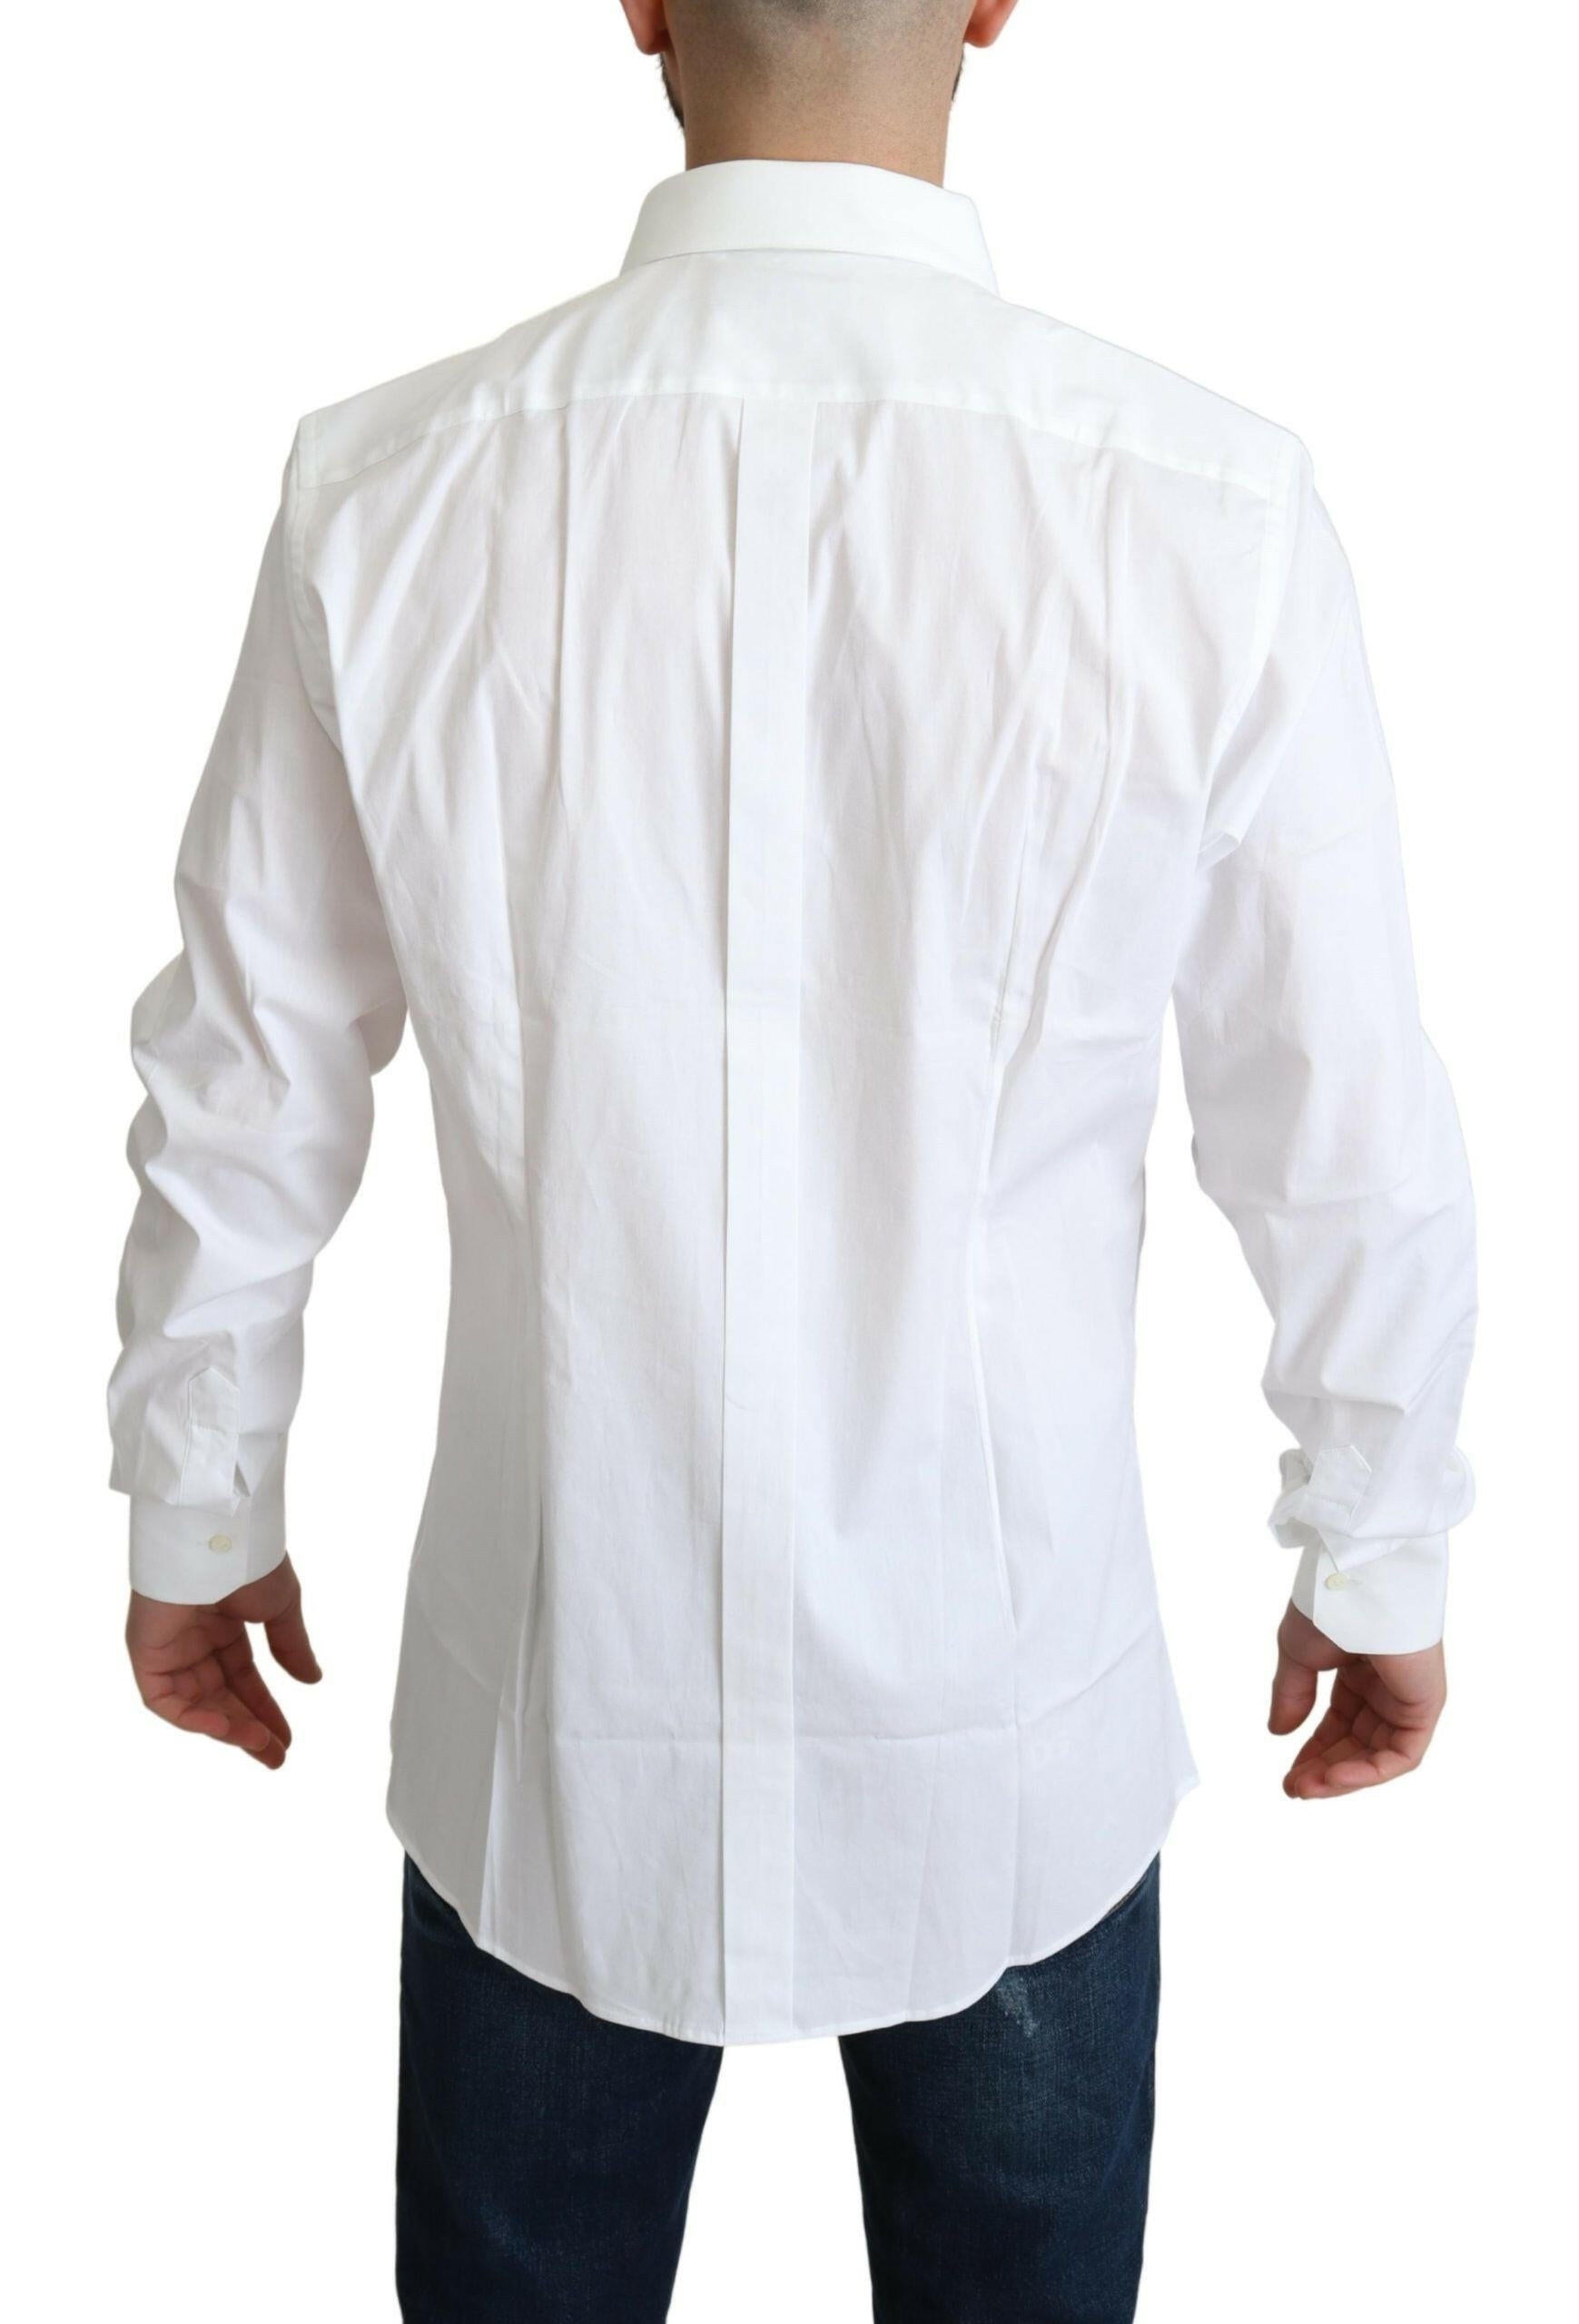 Dolce & Gabbana White Cotton Stretch Men Dress Formal Shirt - GENUINE AUTHENTIC BRAND LLC  